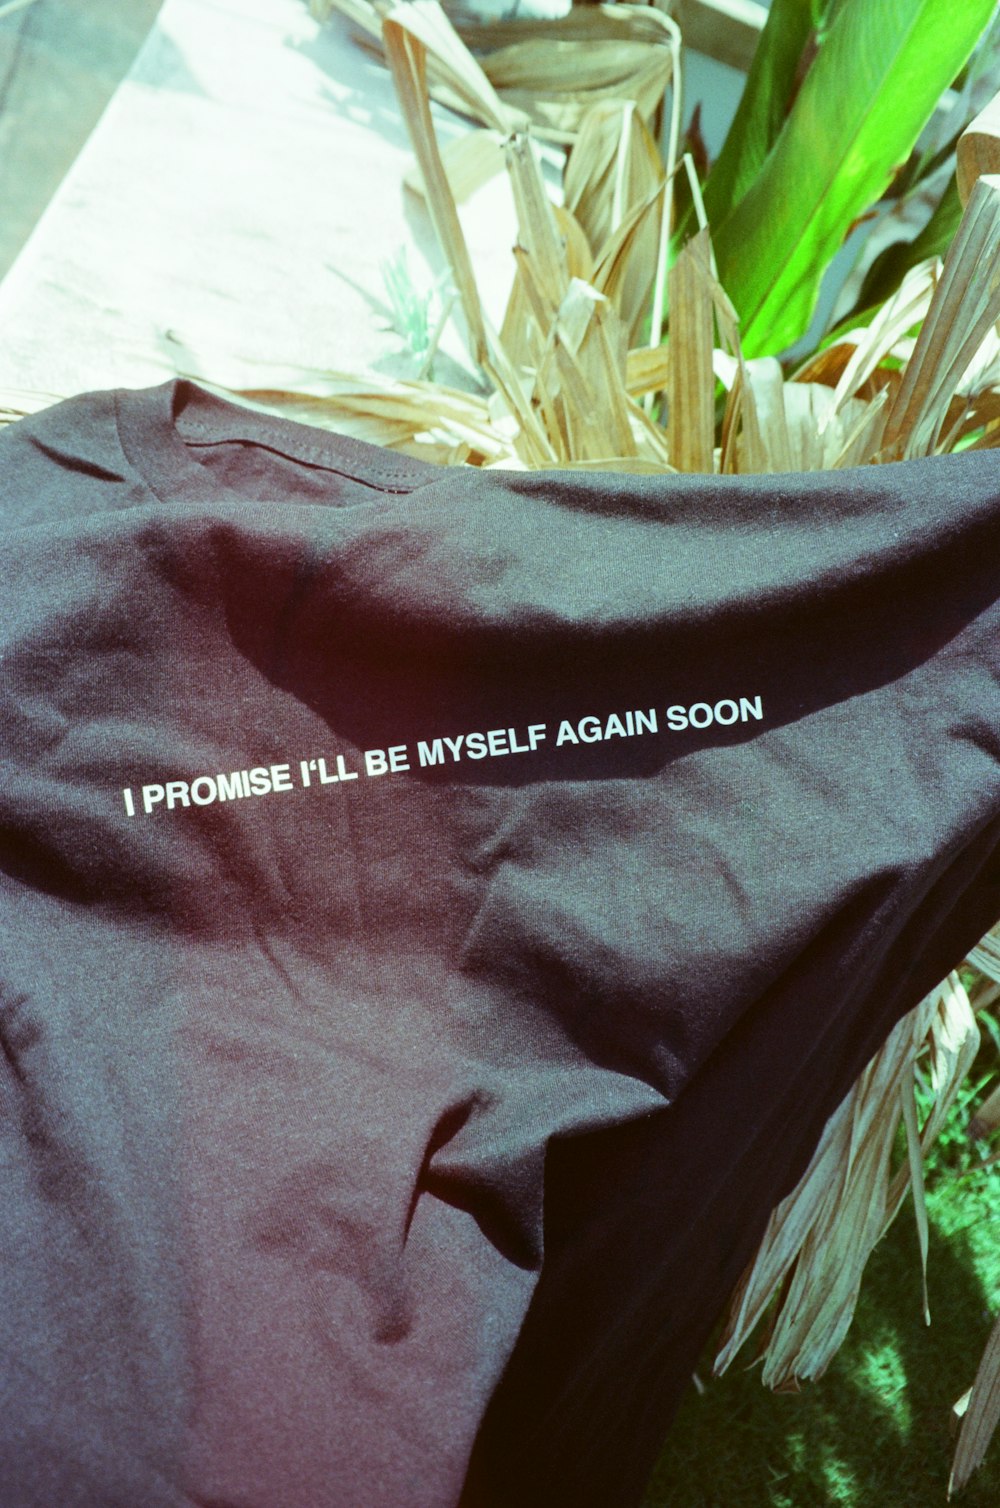 a t - shirt that says i promise i'll be myself again soon